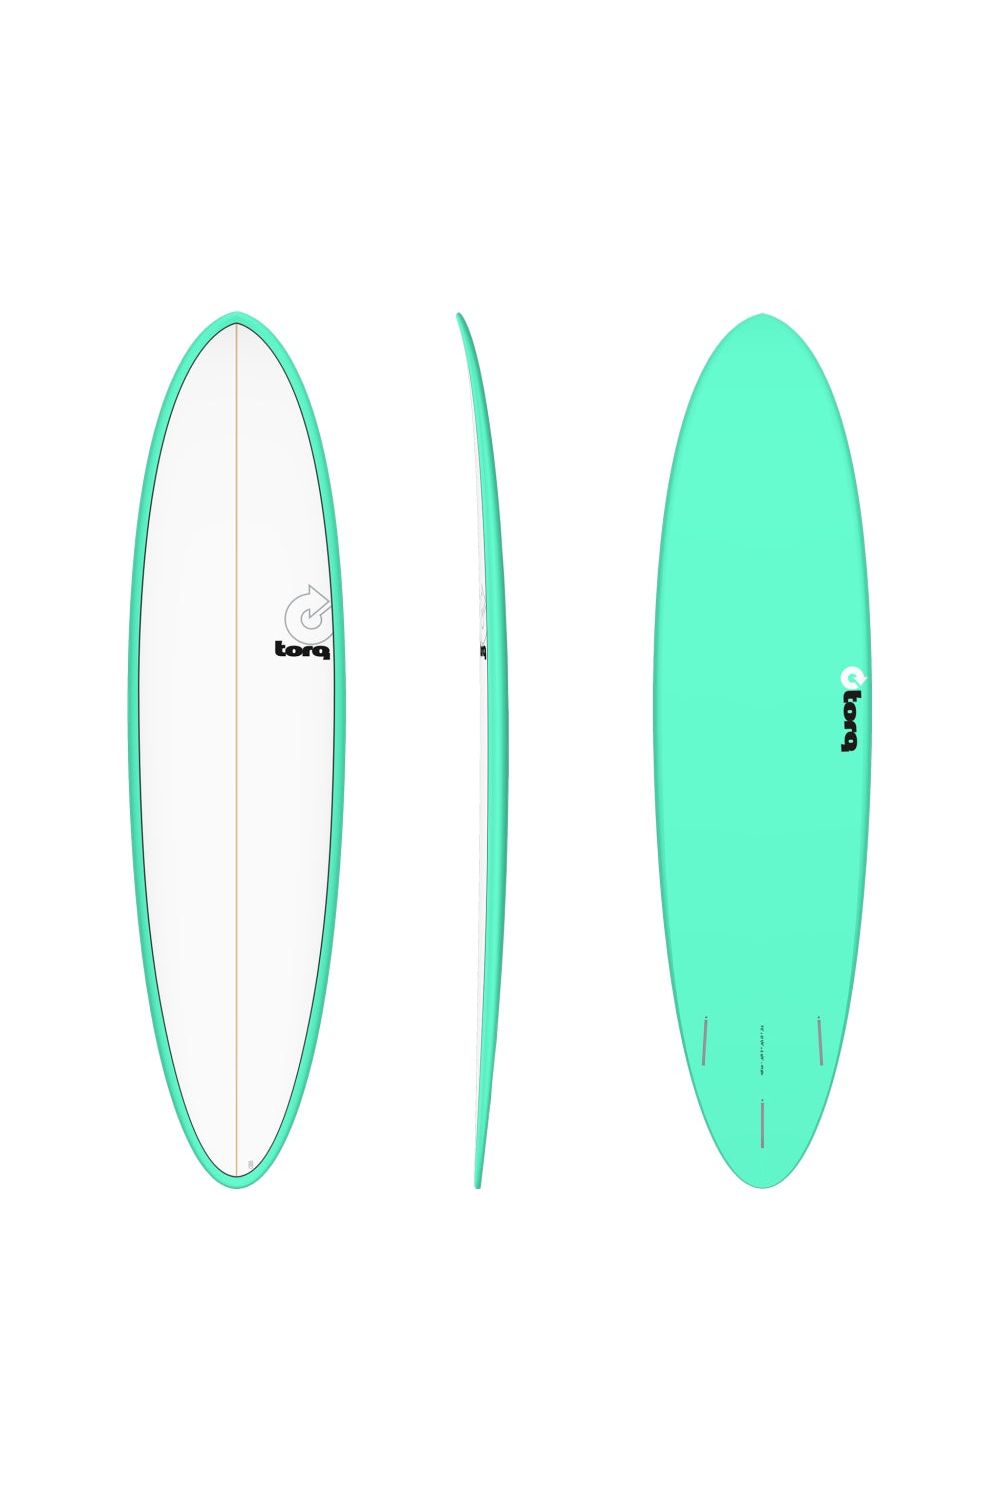 Torq TET Mod Fun Surfboard in Pinline Seagreen